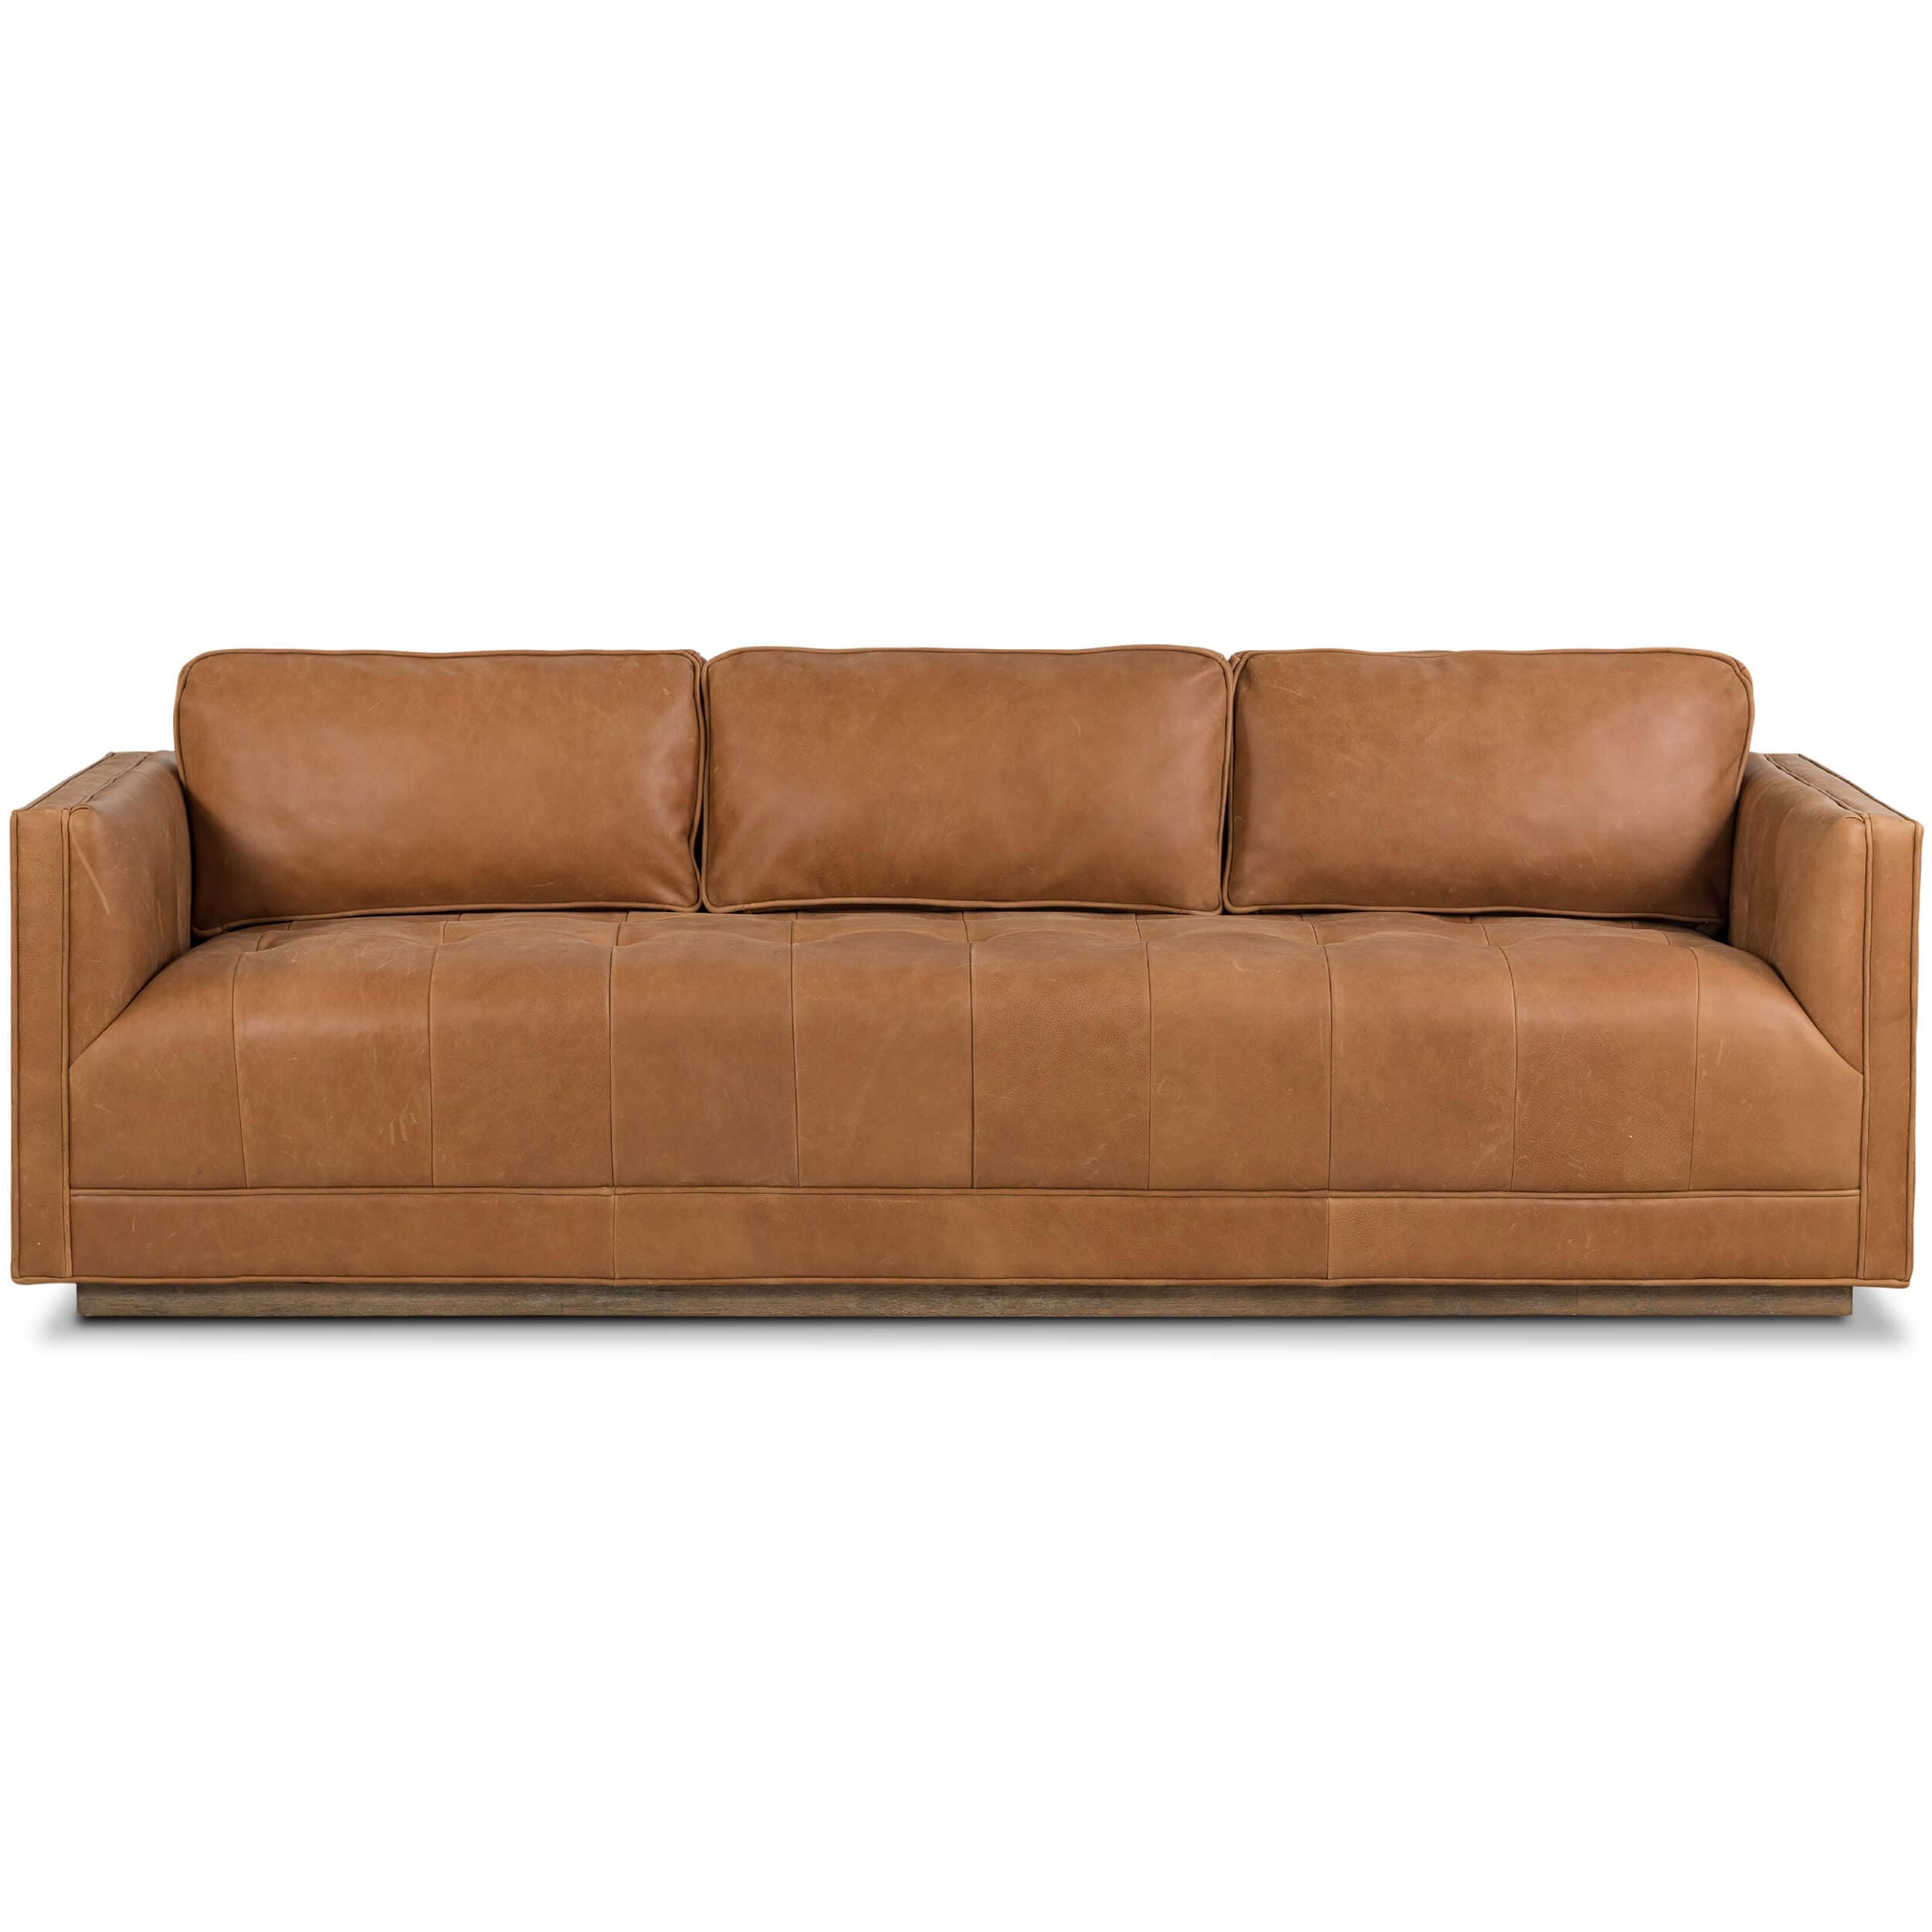 Image of Kiera Leather Sofa, Palermo Cognac